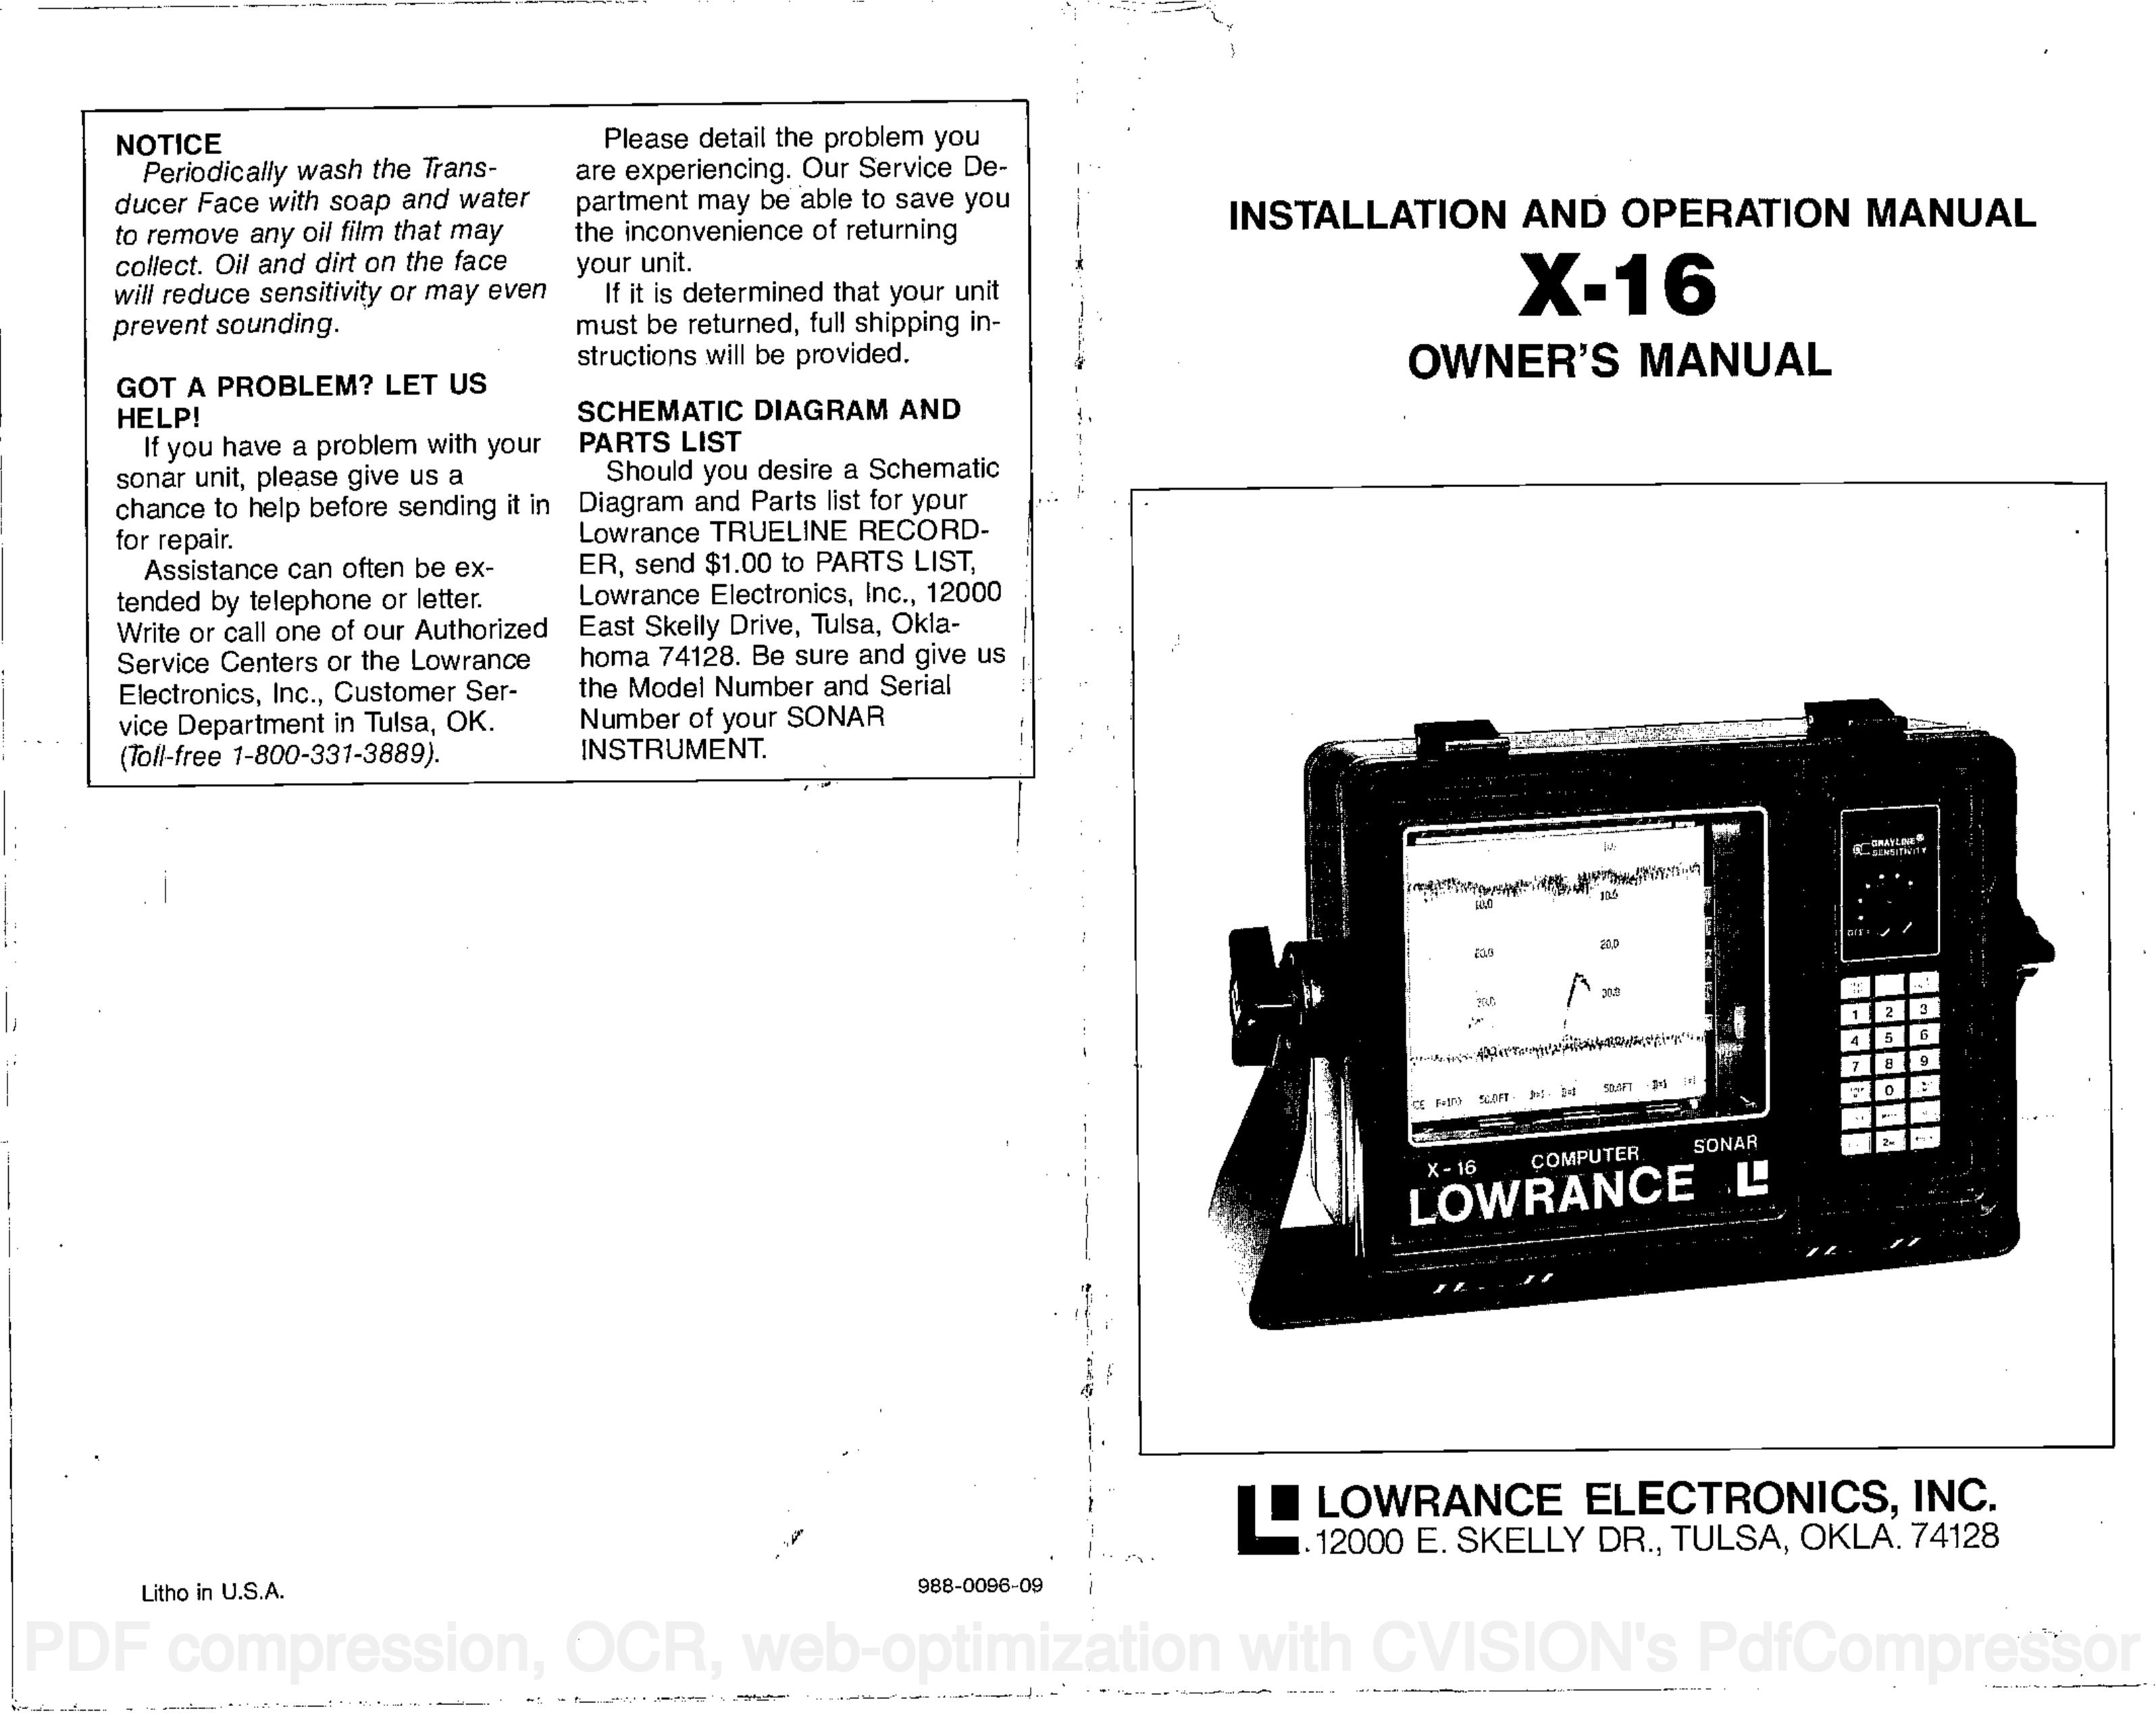 Lowrance electronic X-16 Marine GPS System User Manual